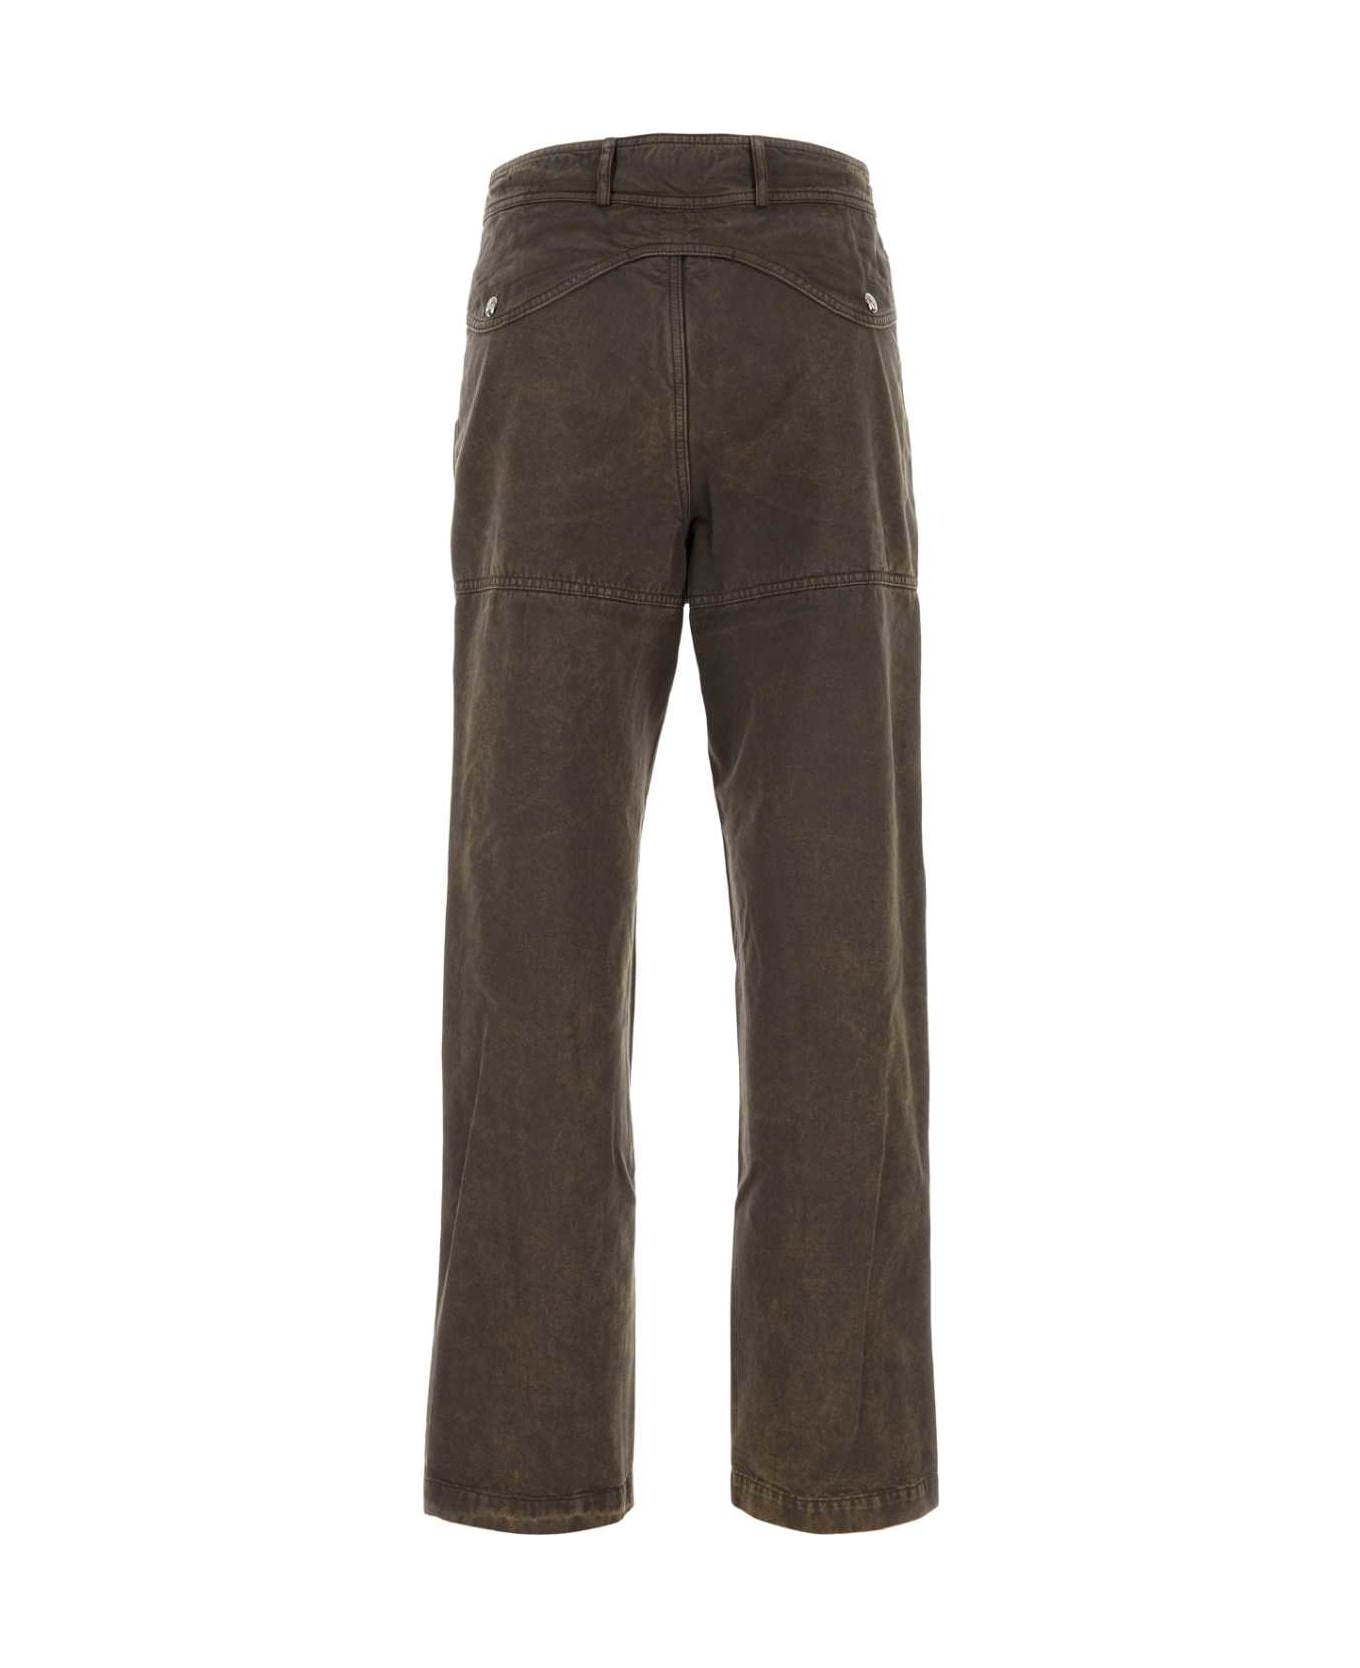 Bluemarble Brown Cotton Pant - BEIGE